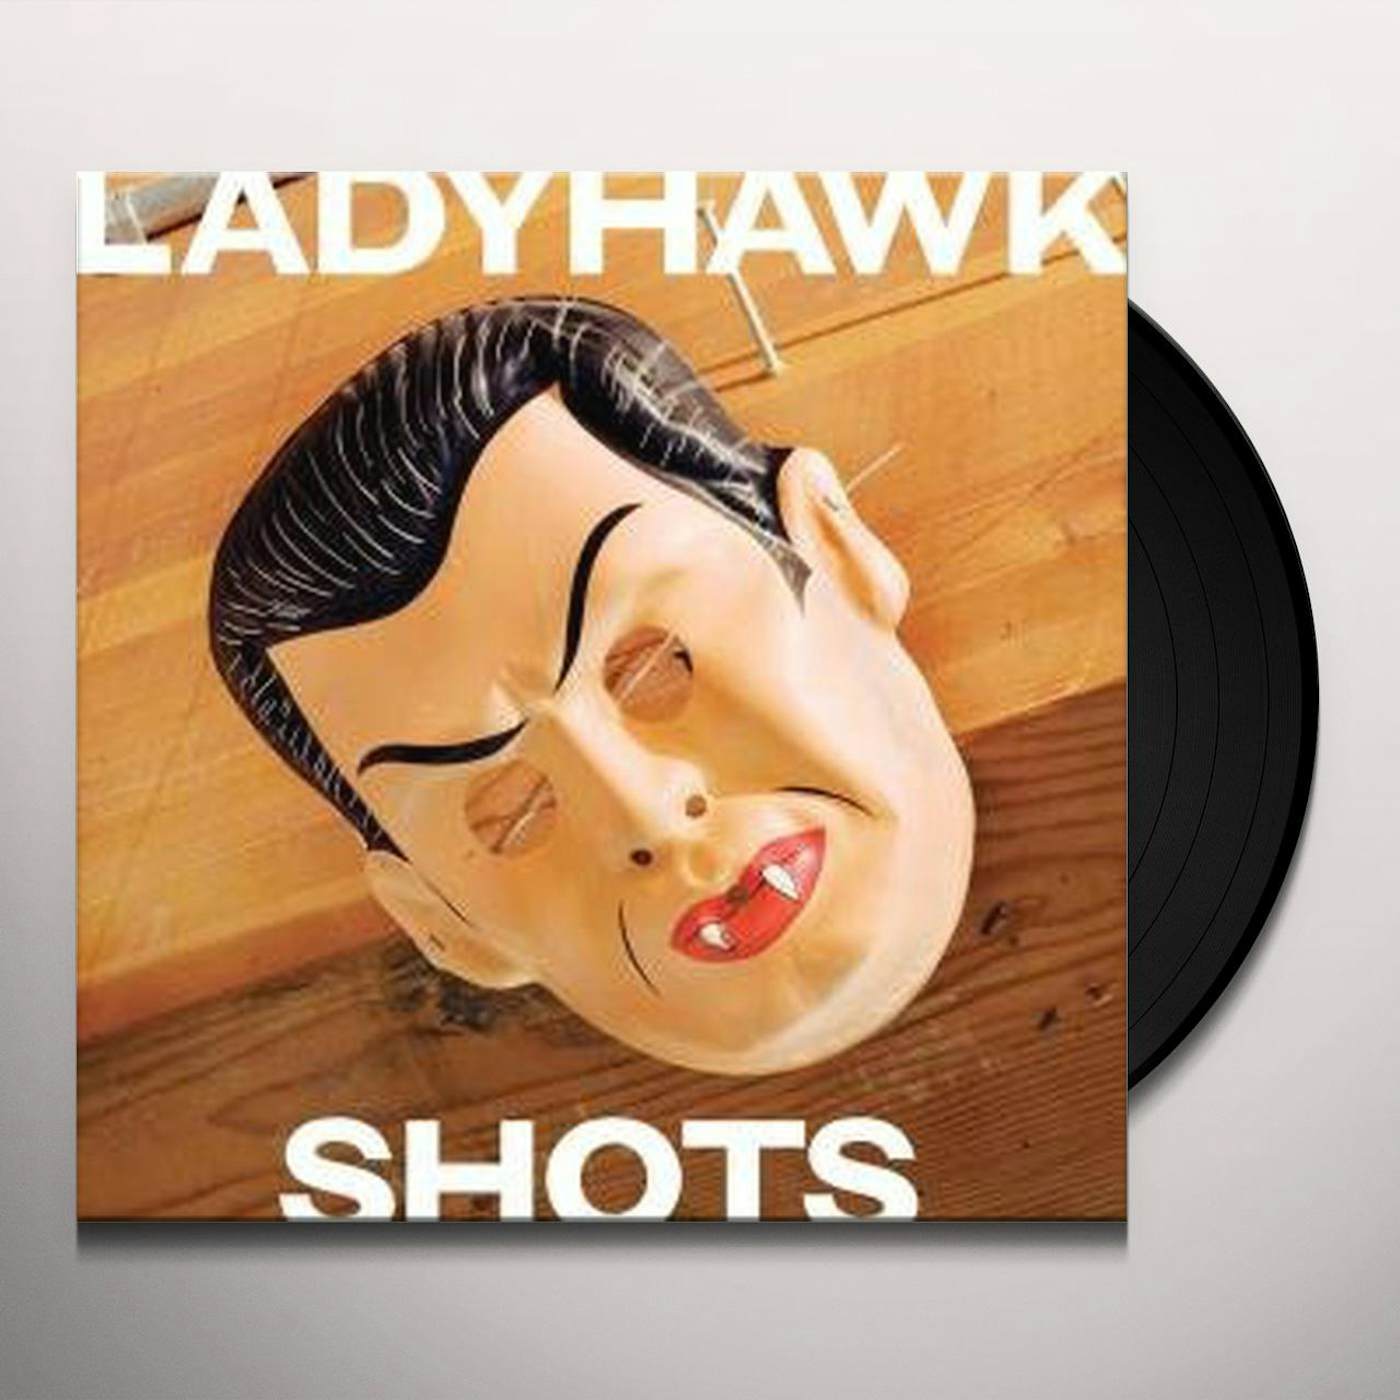 Ladyhawk Shots Vinyl Record